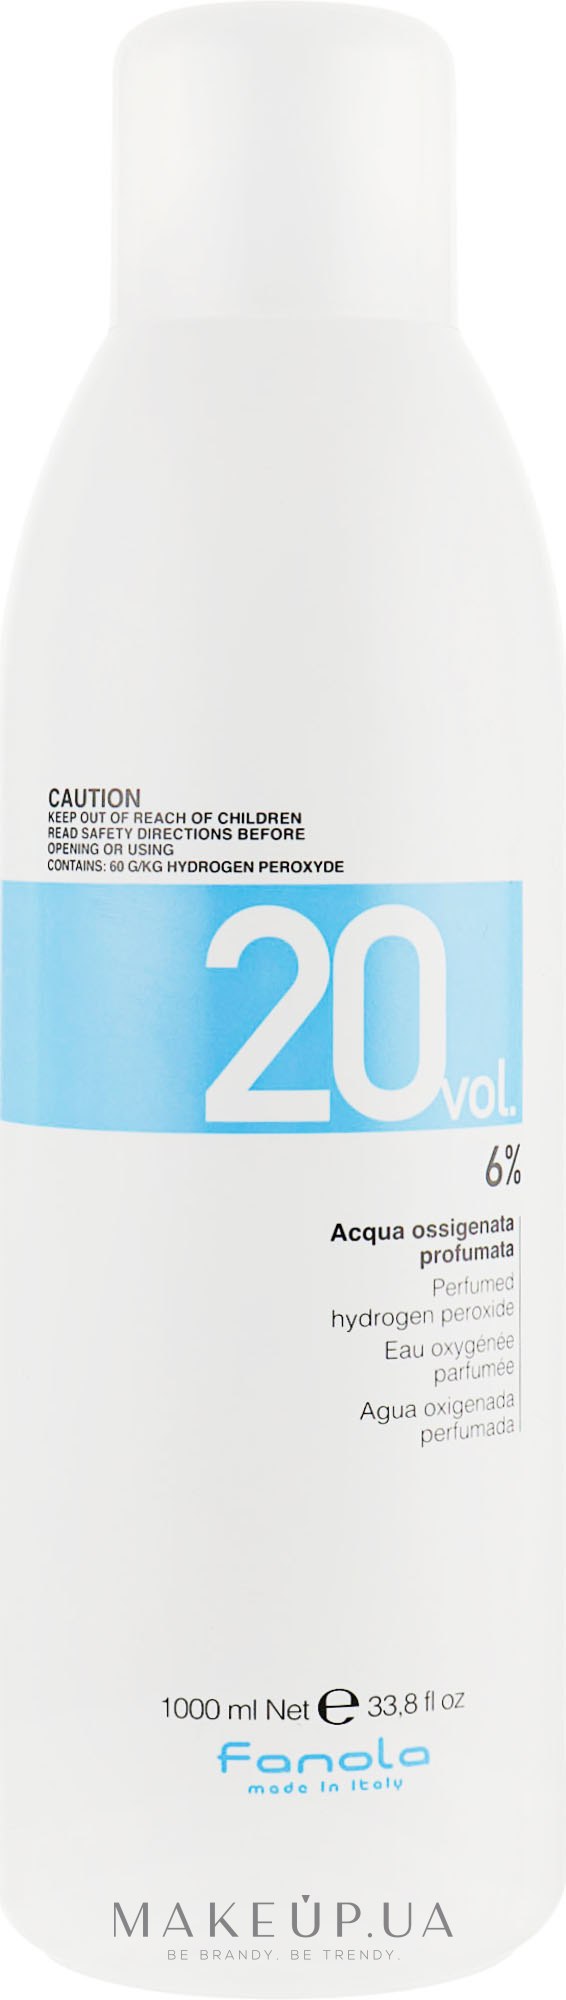 Окислювач 20 vol 6% - Fanola Perfumed Hydrogen Peroxide Hair Oxidant — фото 1000ml